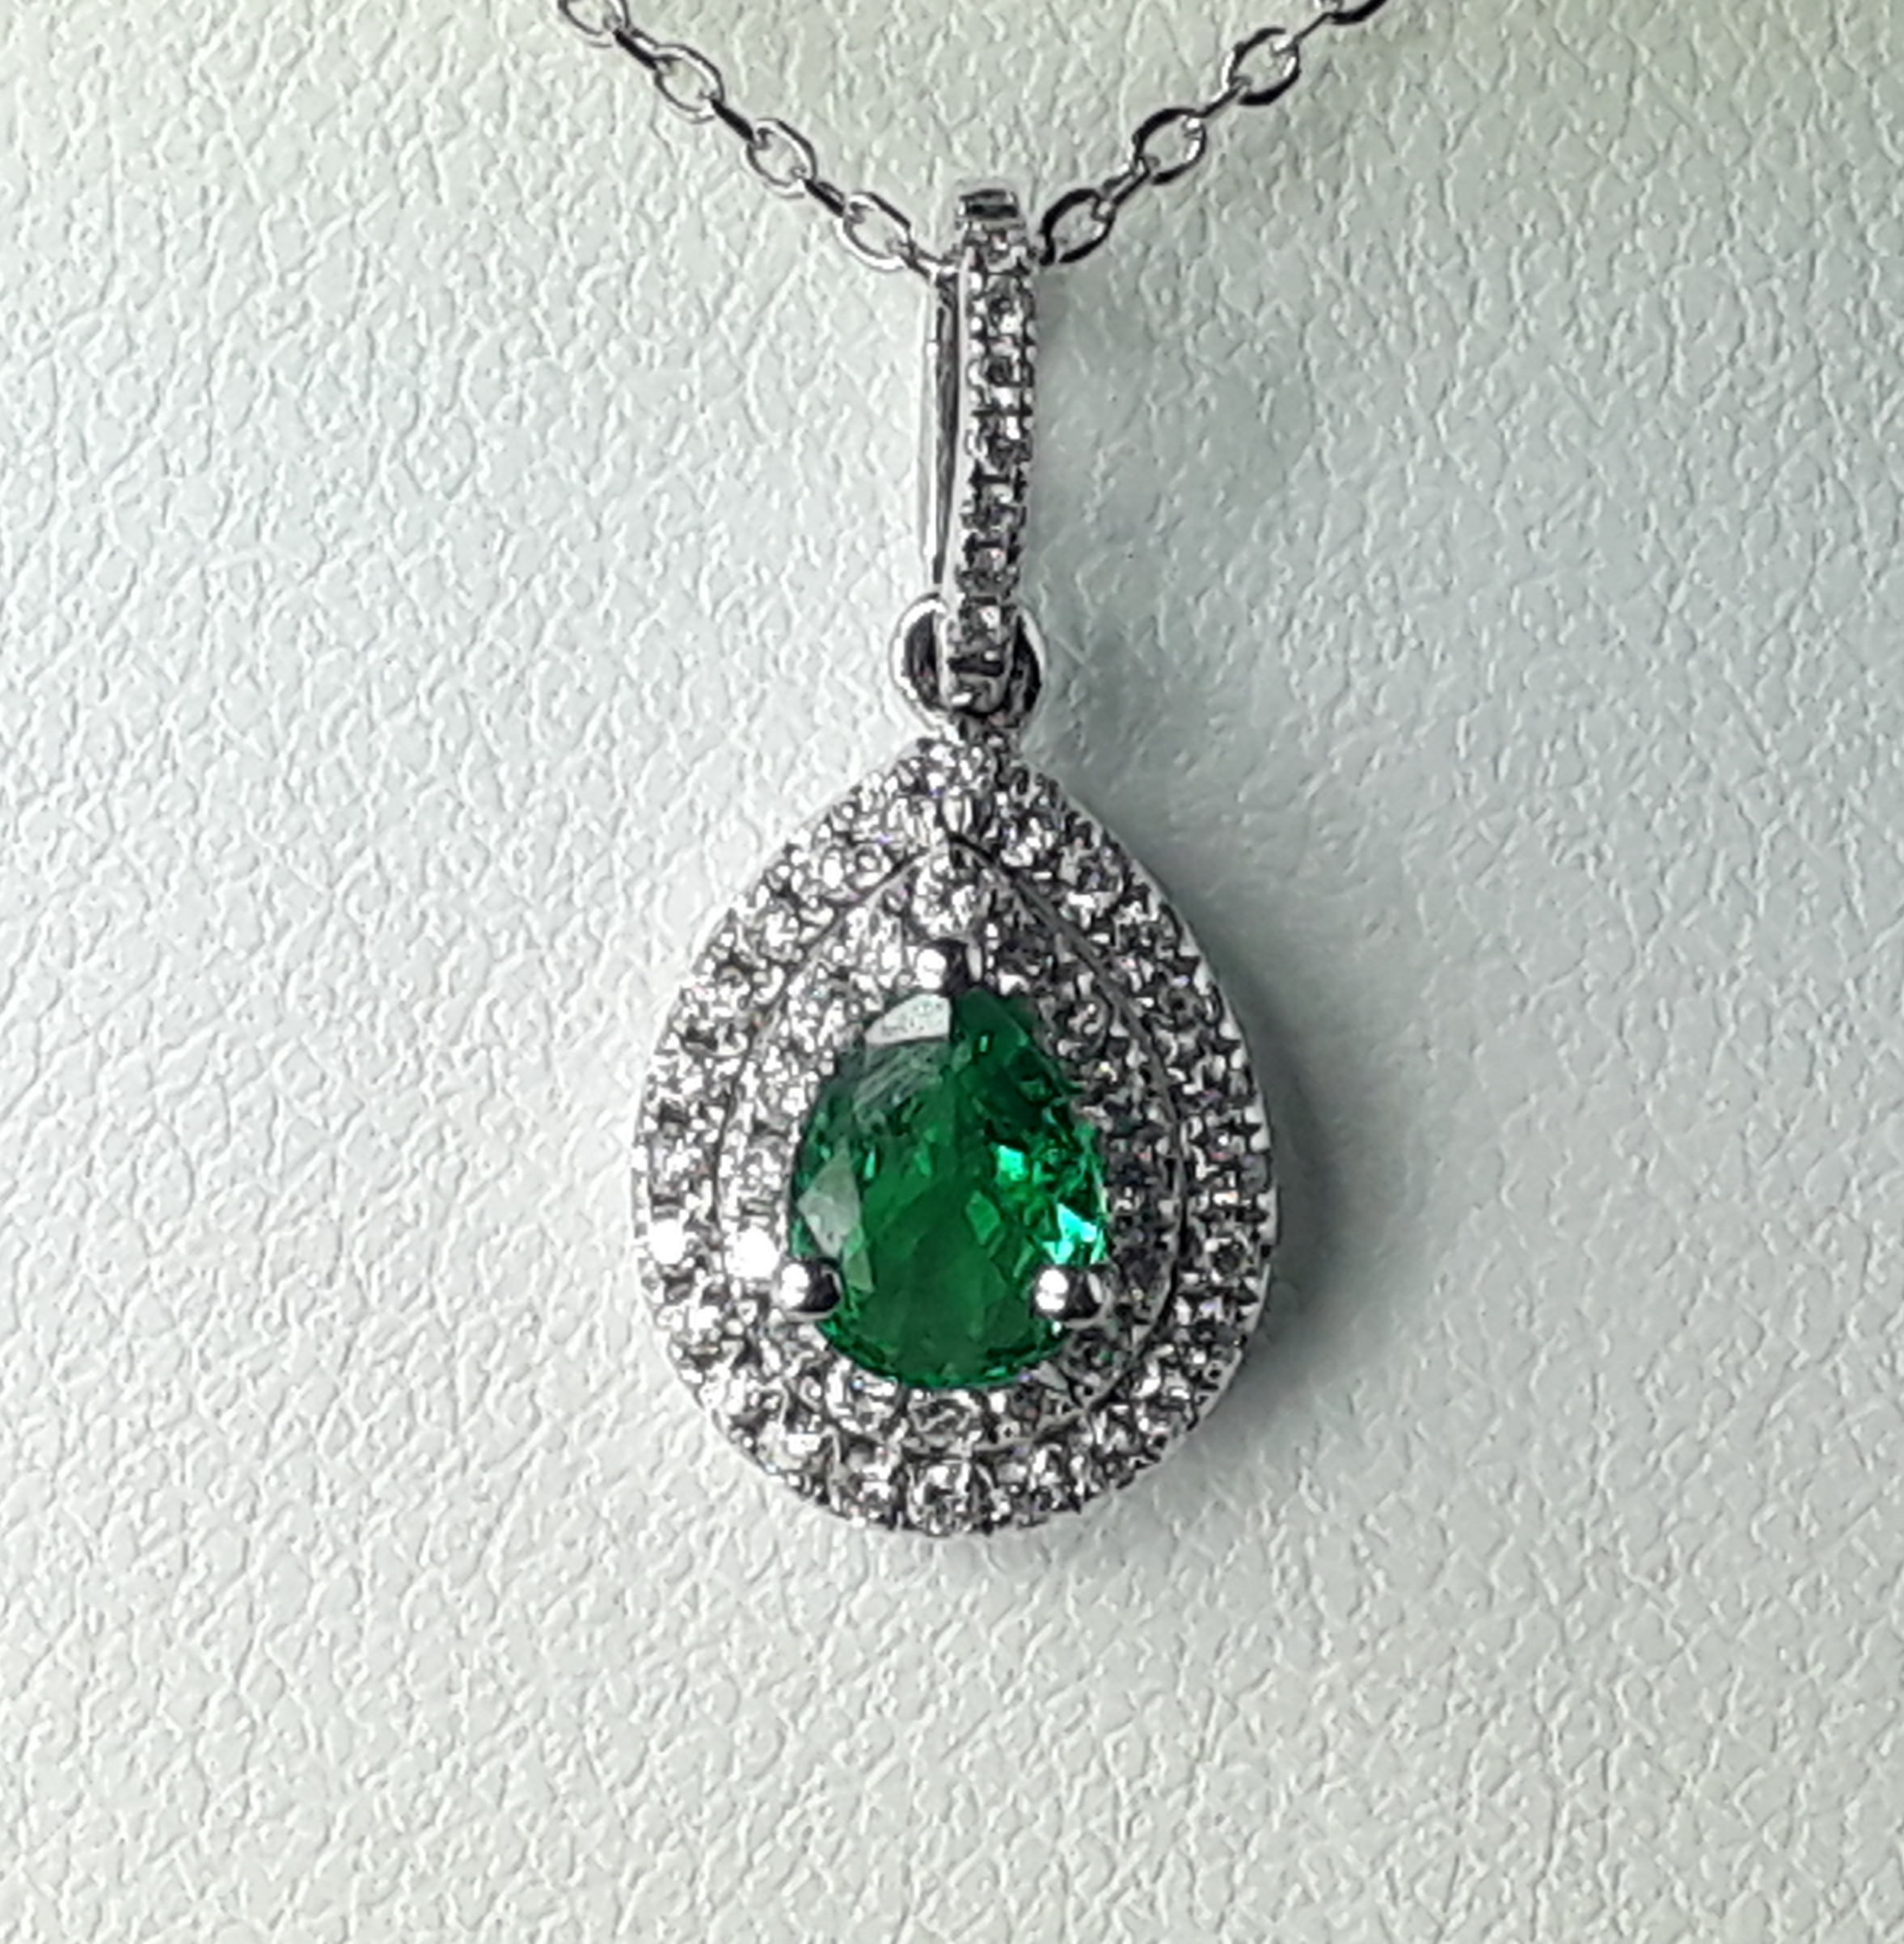 Emerald and Diamond pendant